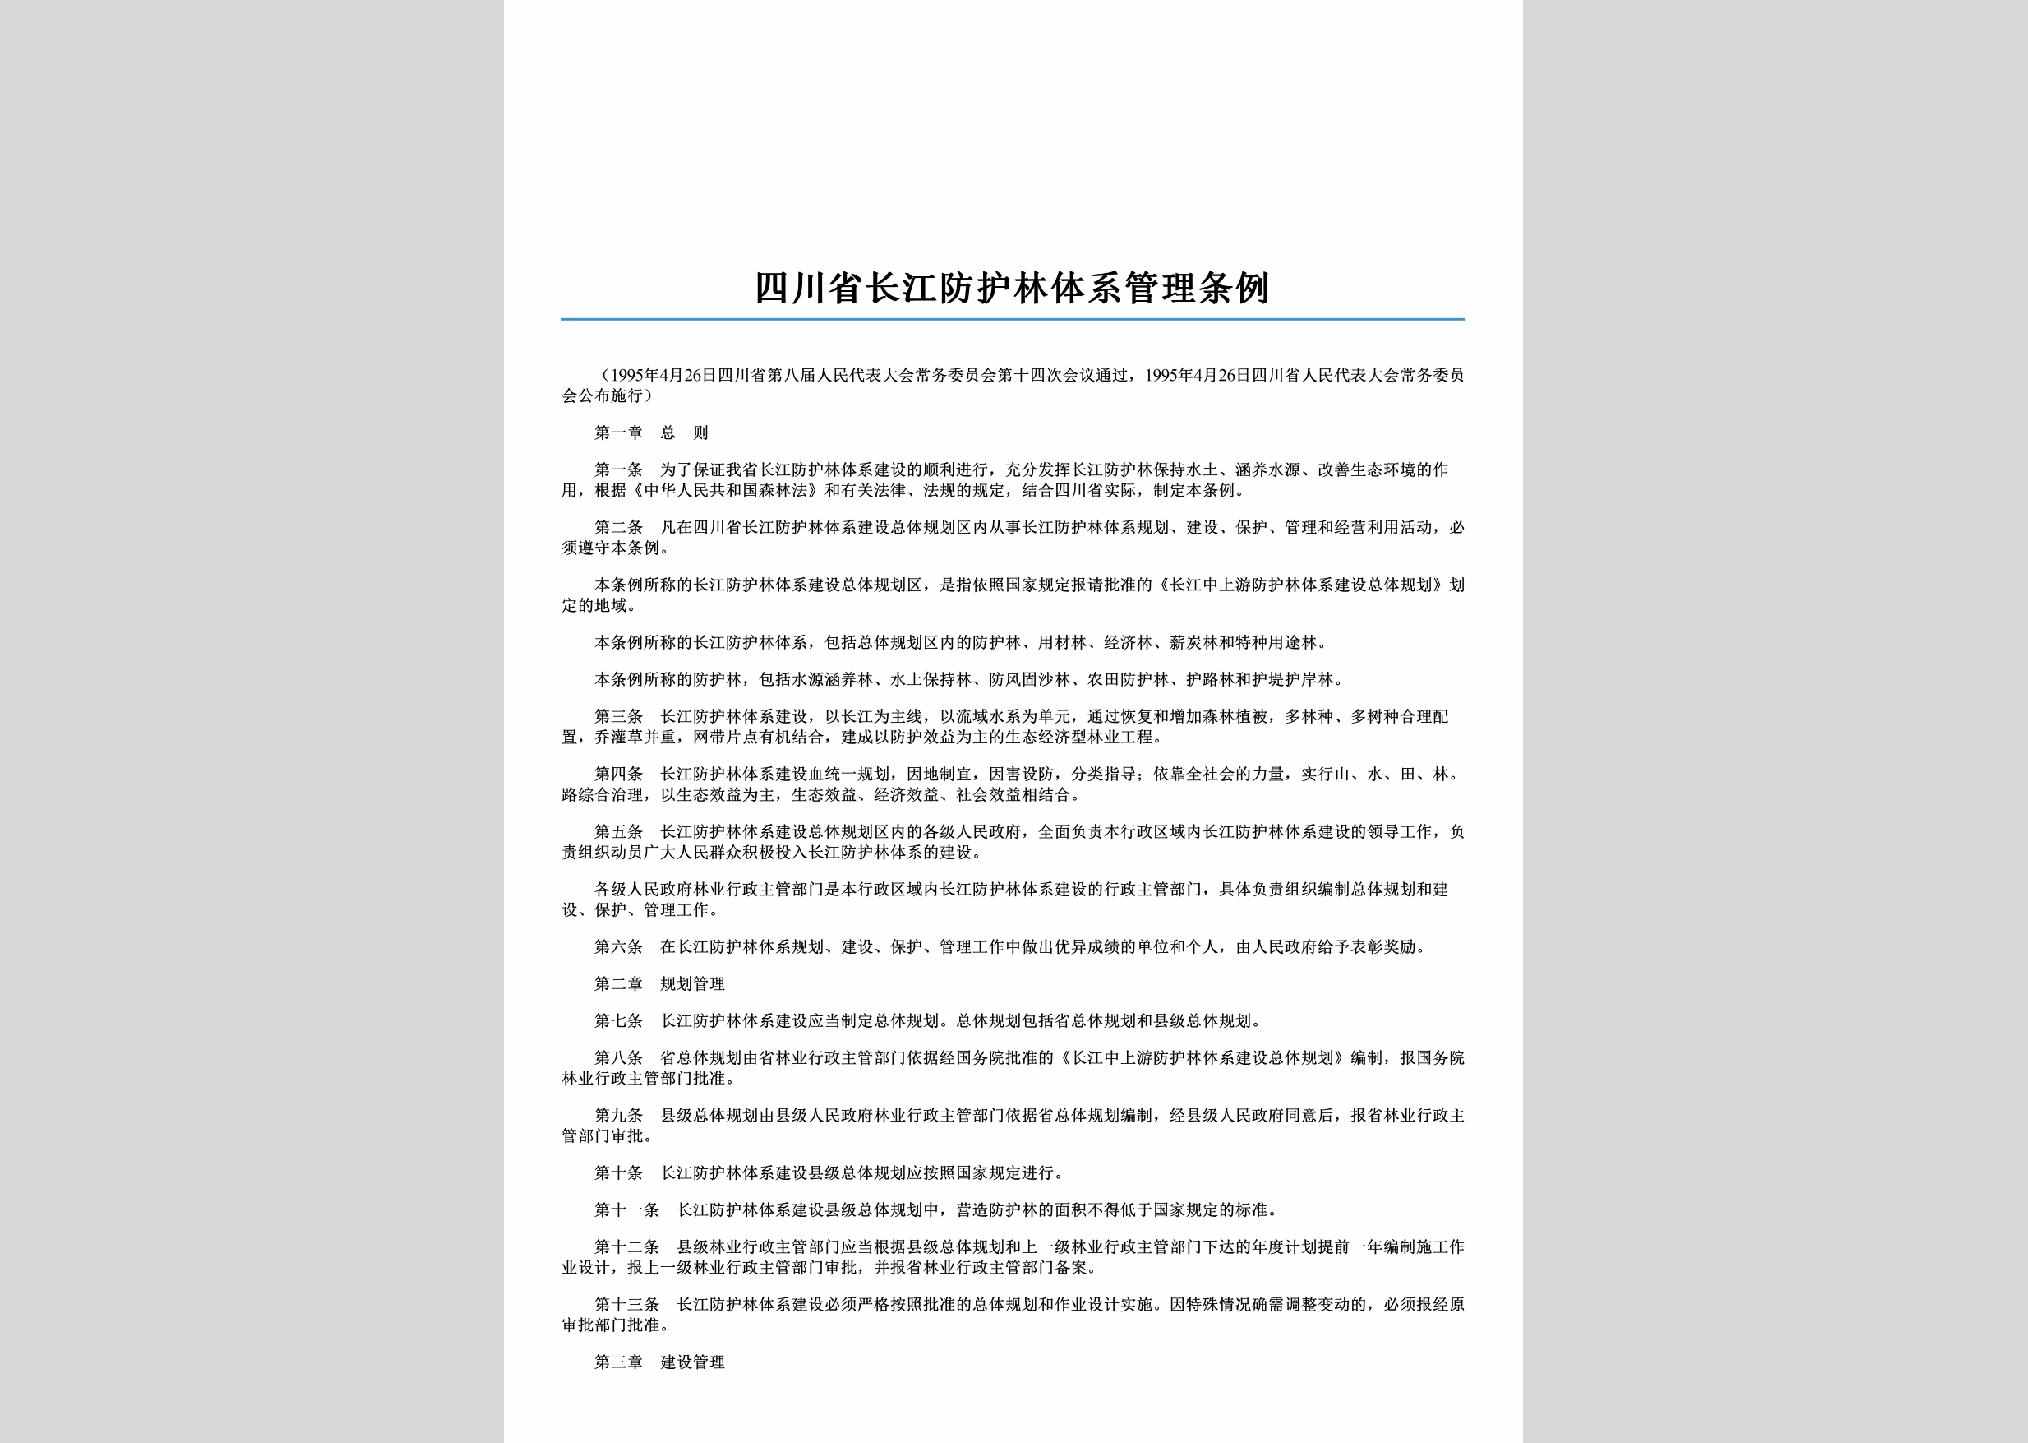 SC-CJFHGLTL-2006：四川省长江防护林体系管理条例